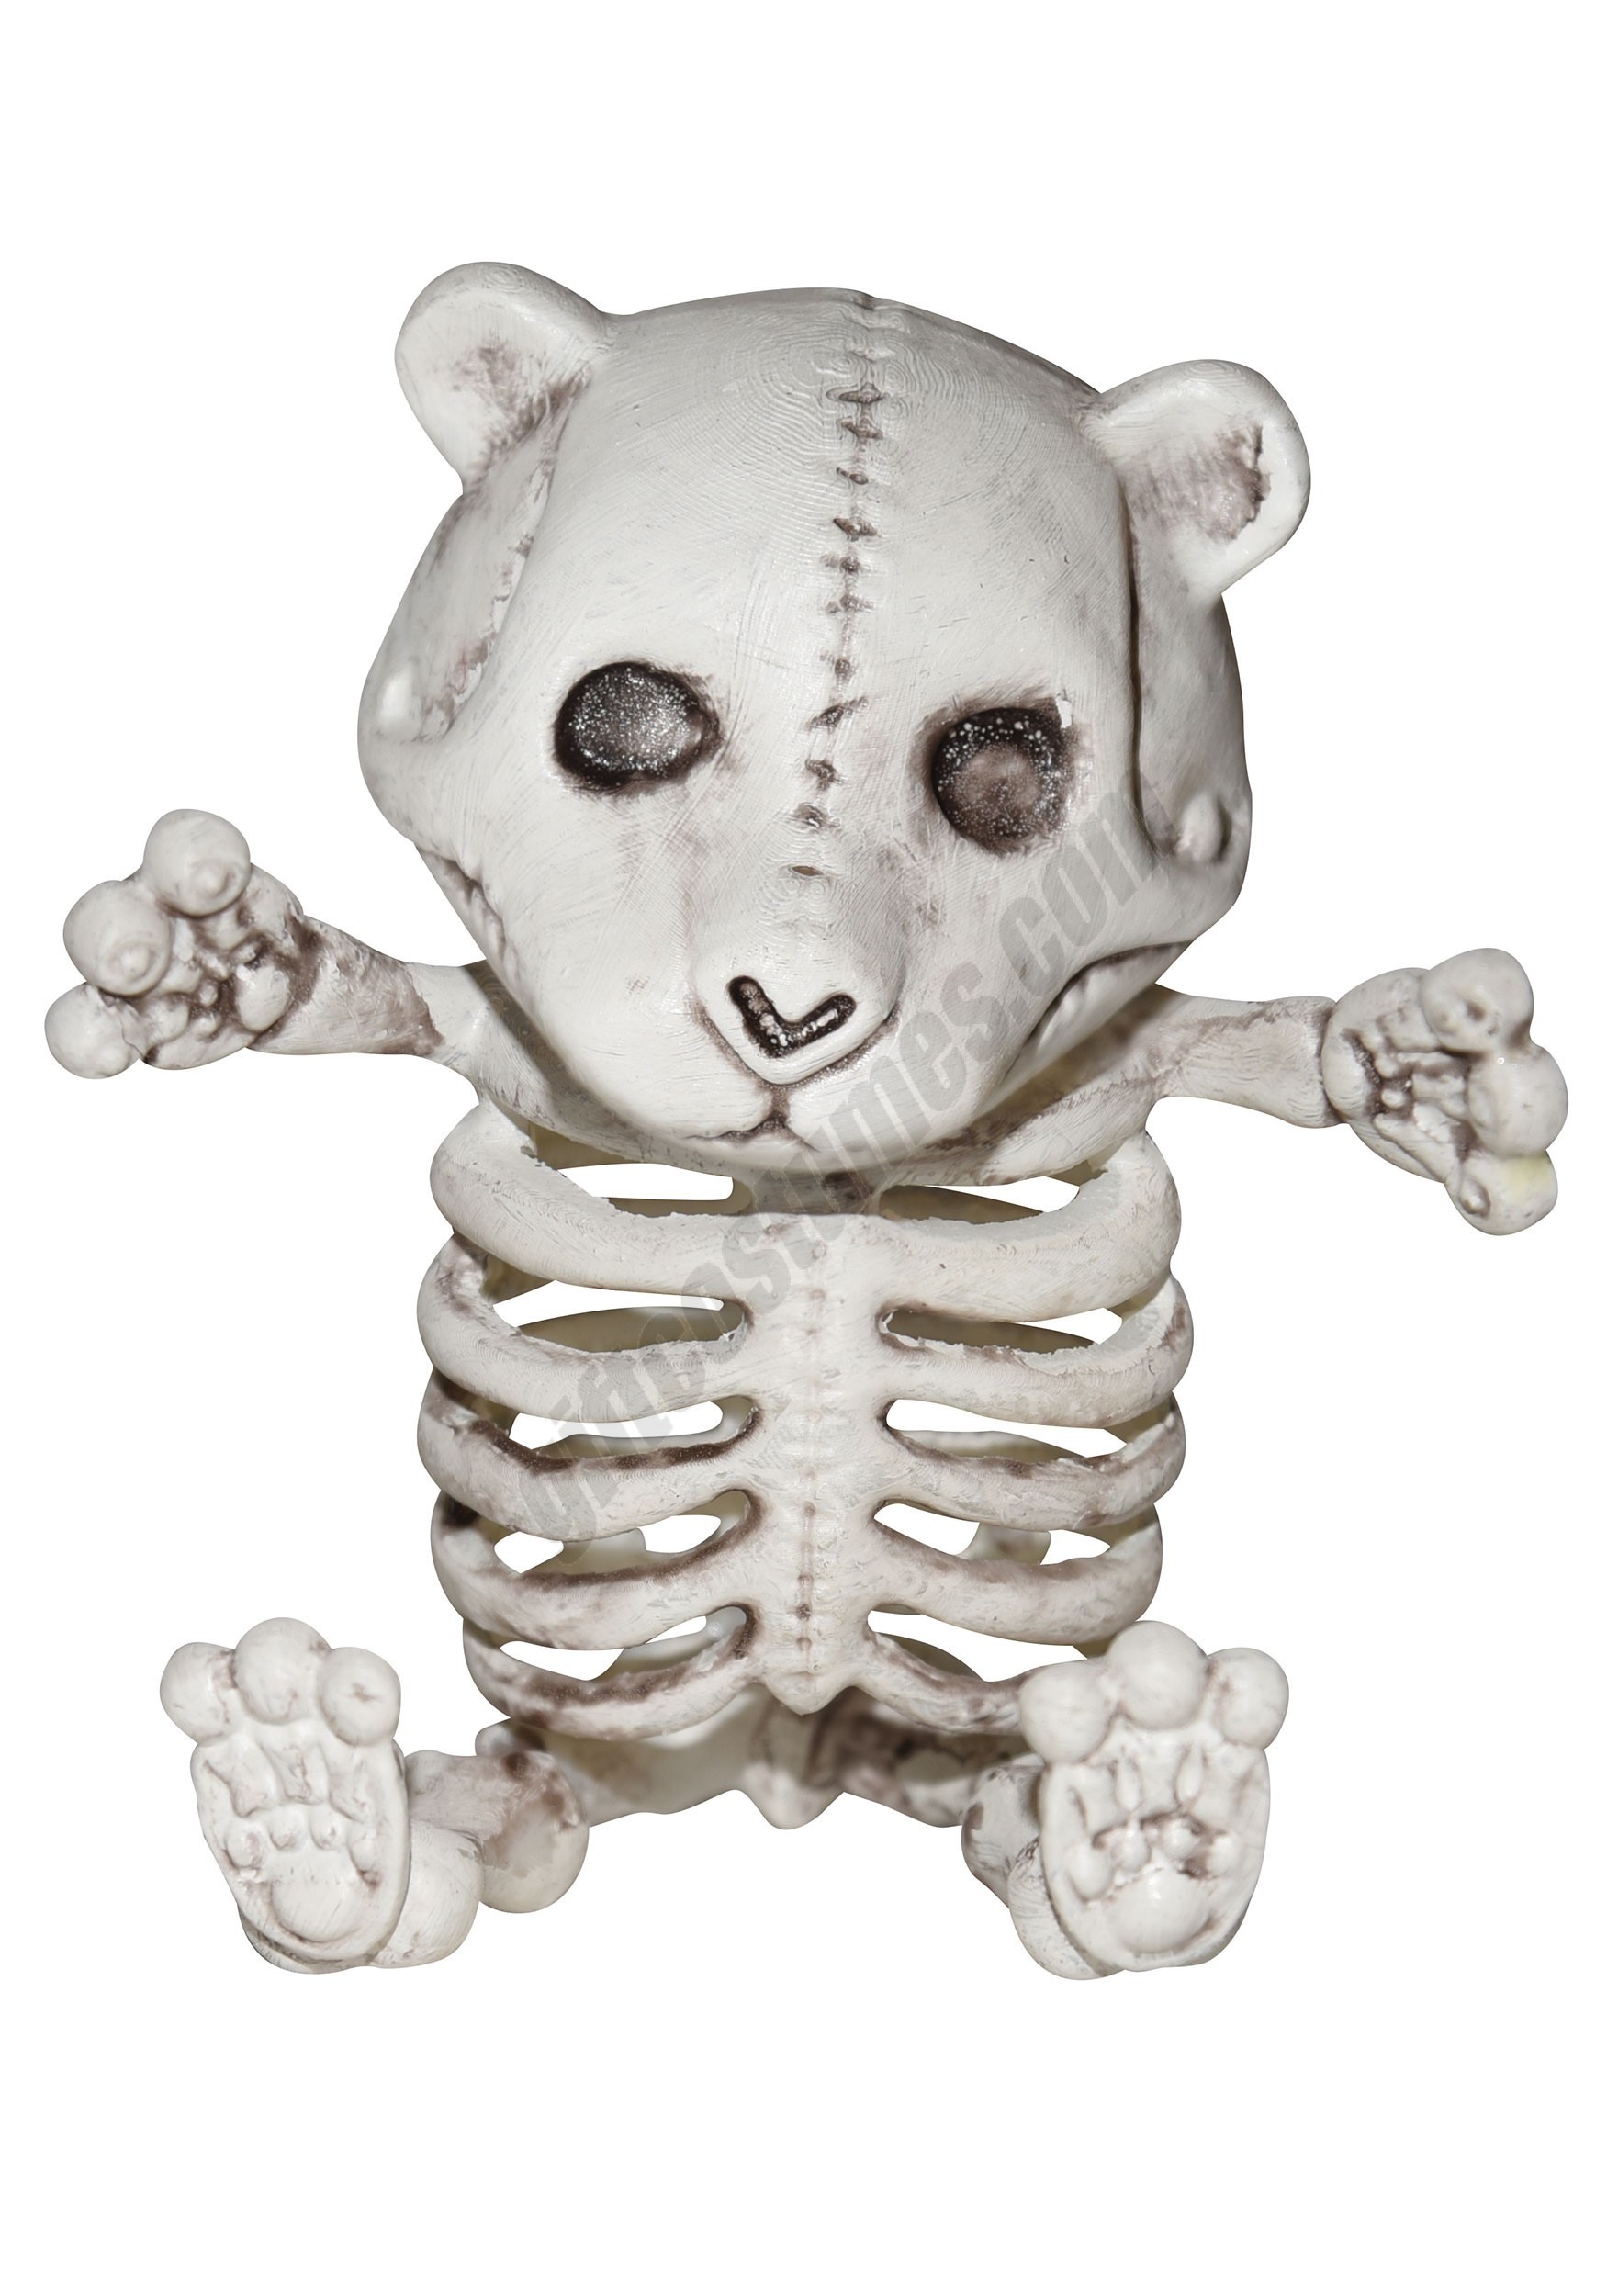 Skeleton Teddy Bear Decor Promotions - Skeleton Teddy Bear Decor Promotions